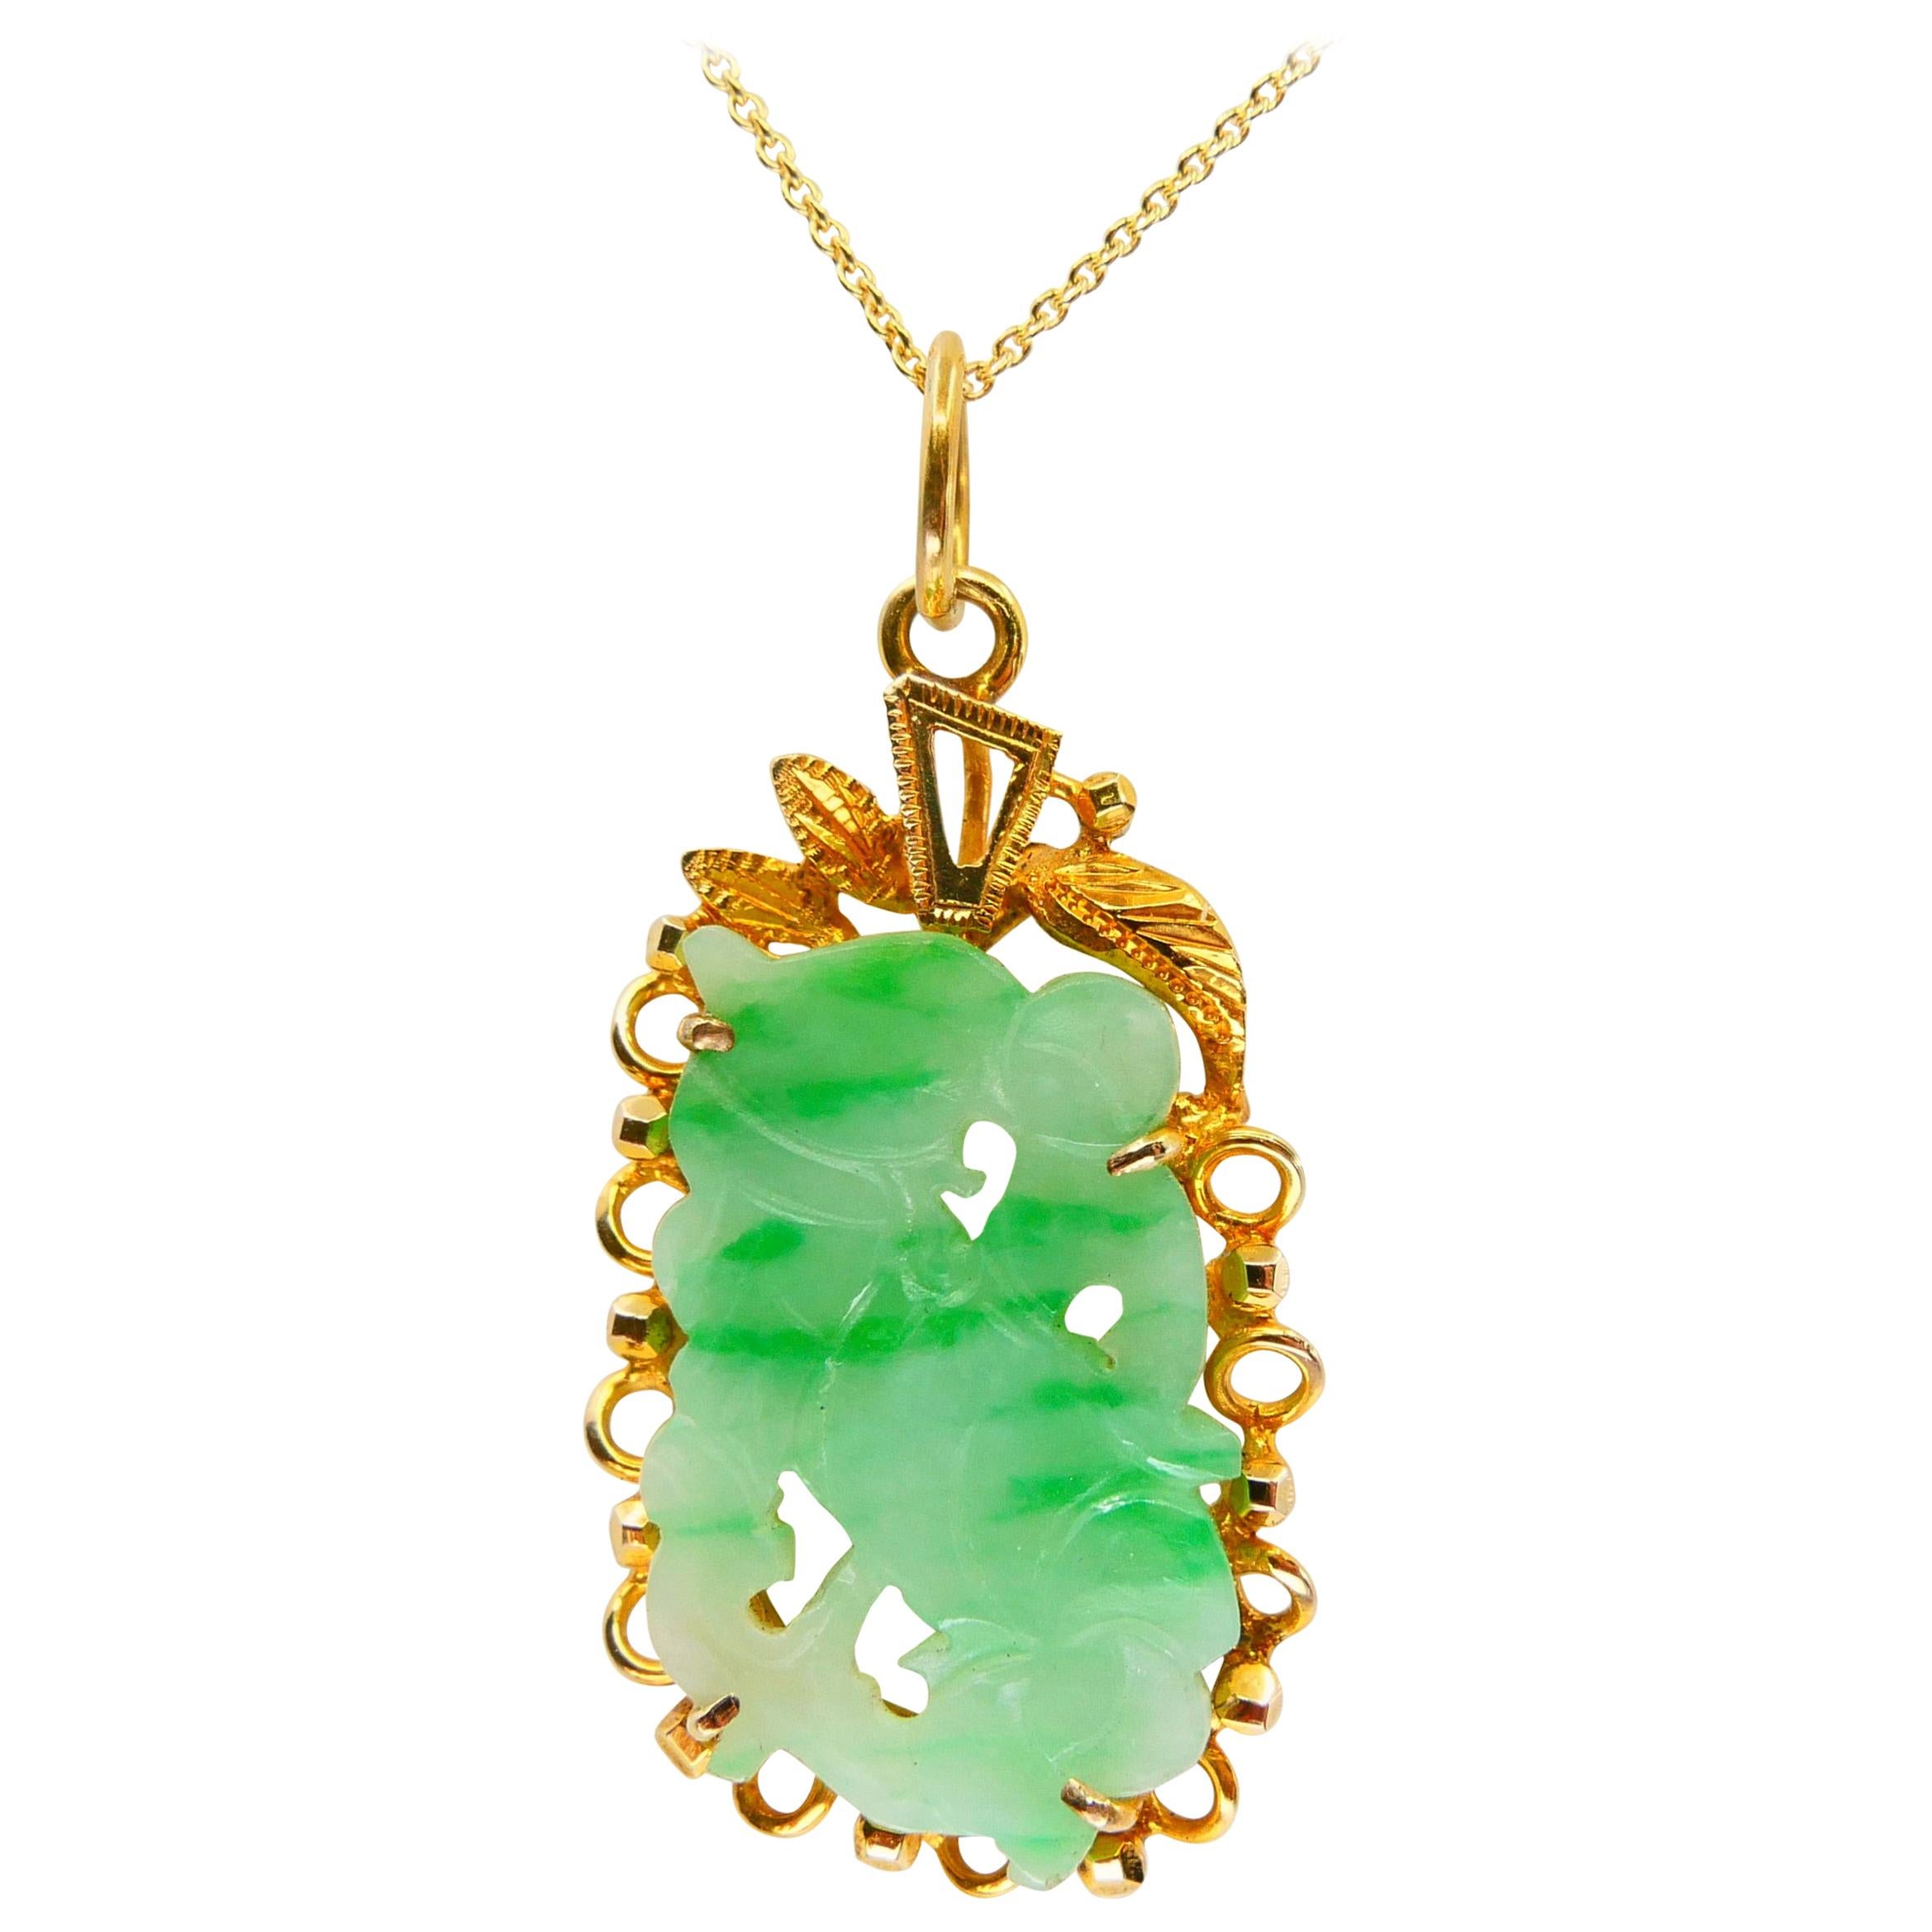 Certified Type A Jadeite Jade Pendant Drop Necklace, Apple Green Veins, N.O.S